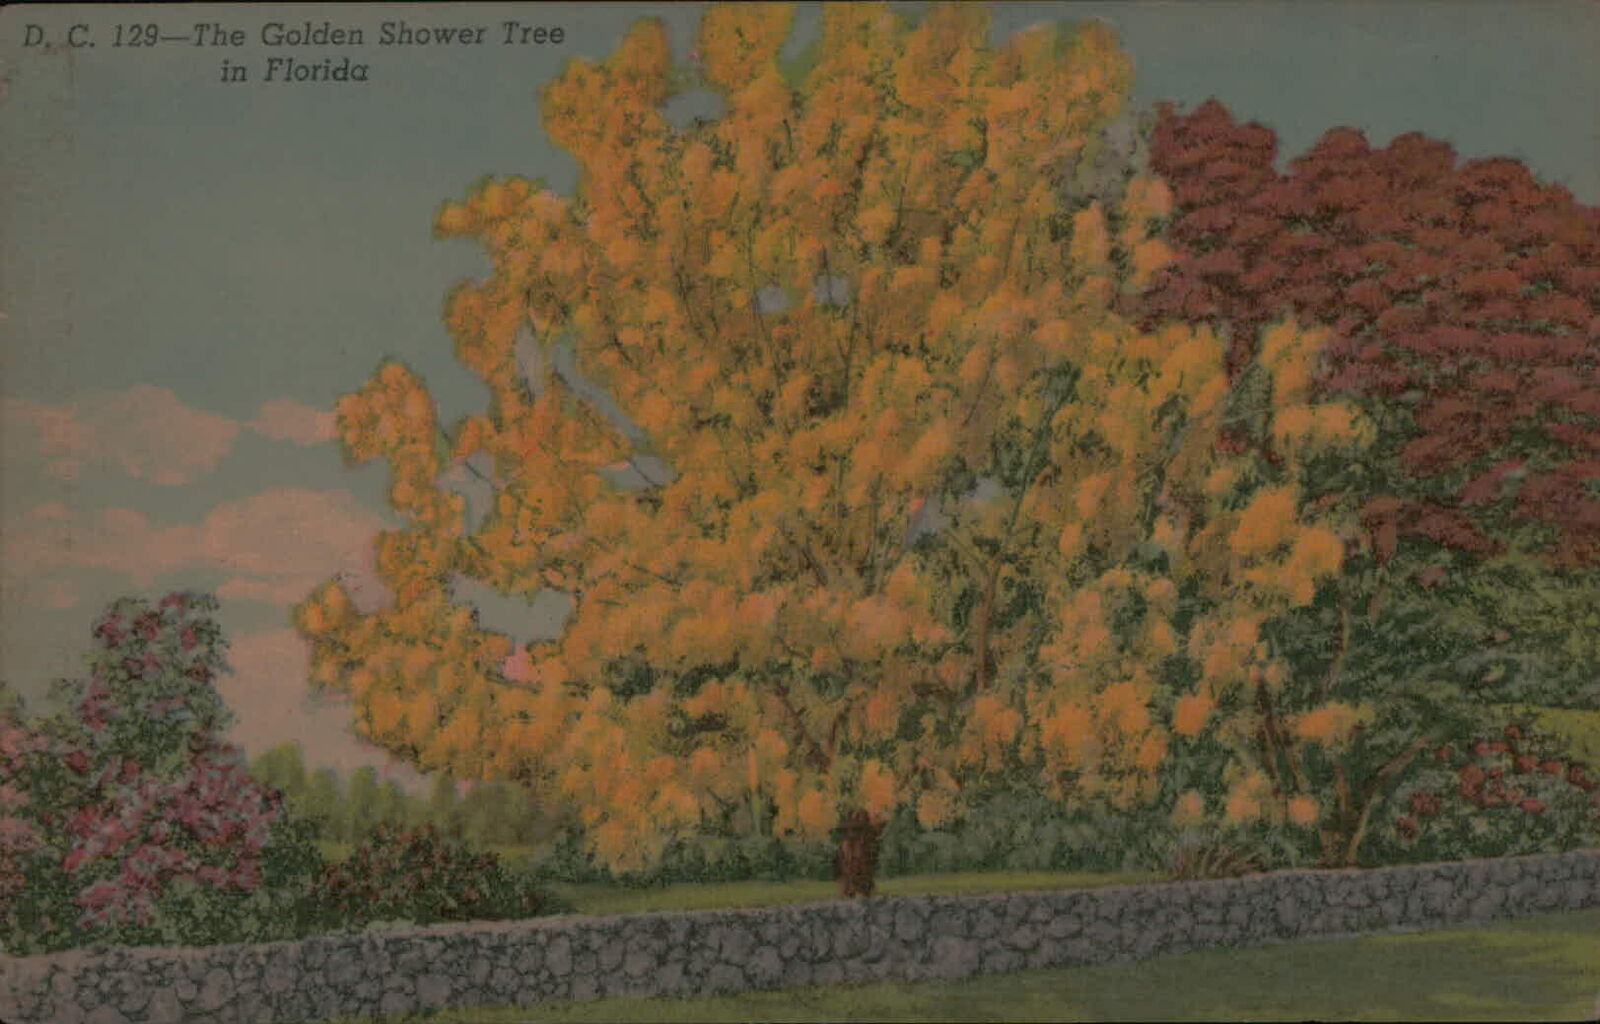 Postcard: D. C. 129-The Golden Shower Tree in Florida